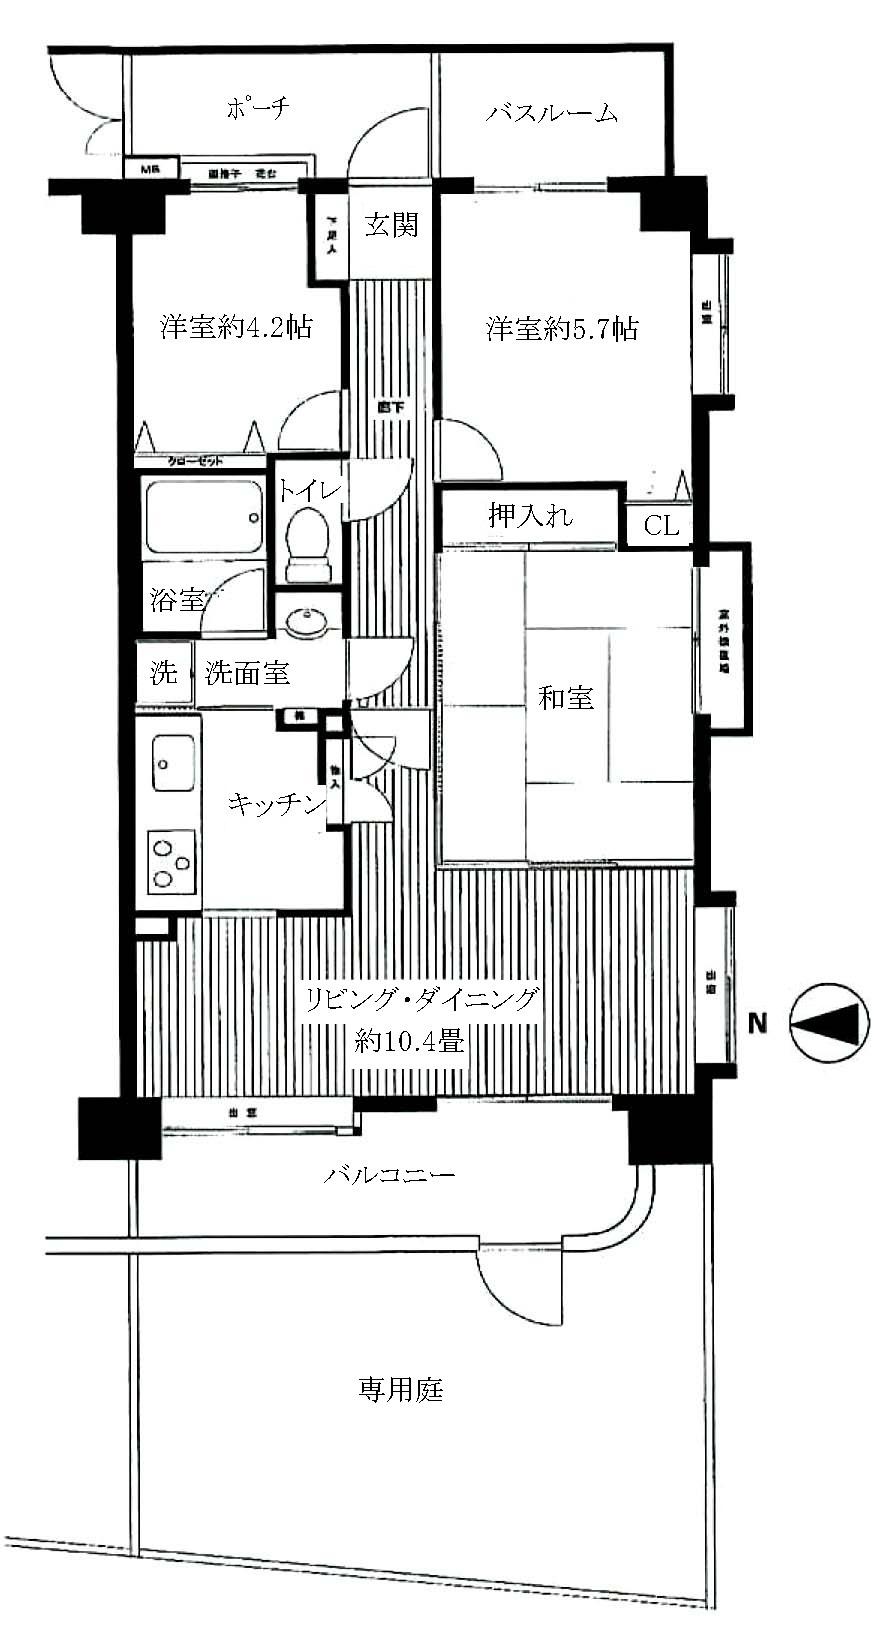 Floor plan. 3LDK, Price 16.8 million yen, Occupied area 62.76 sq m , Balcony area 11.95 sq m